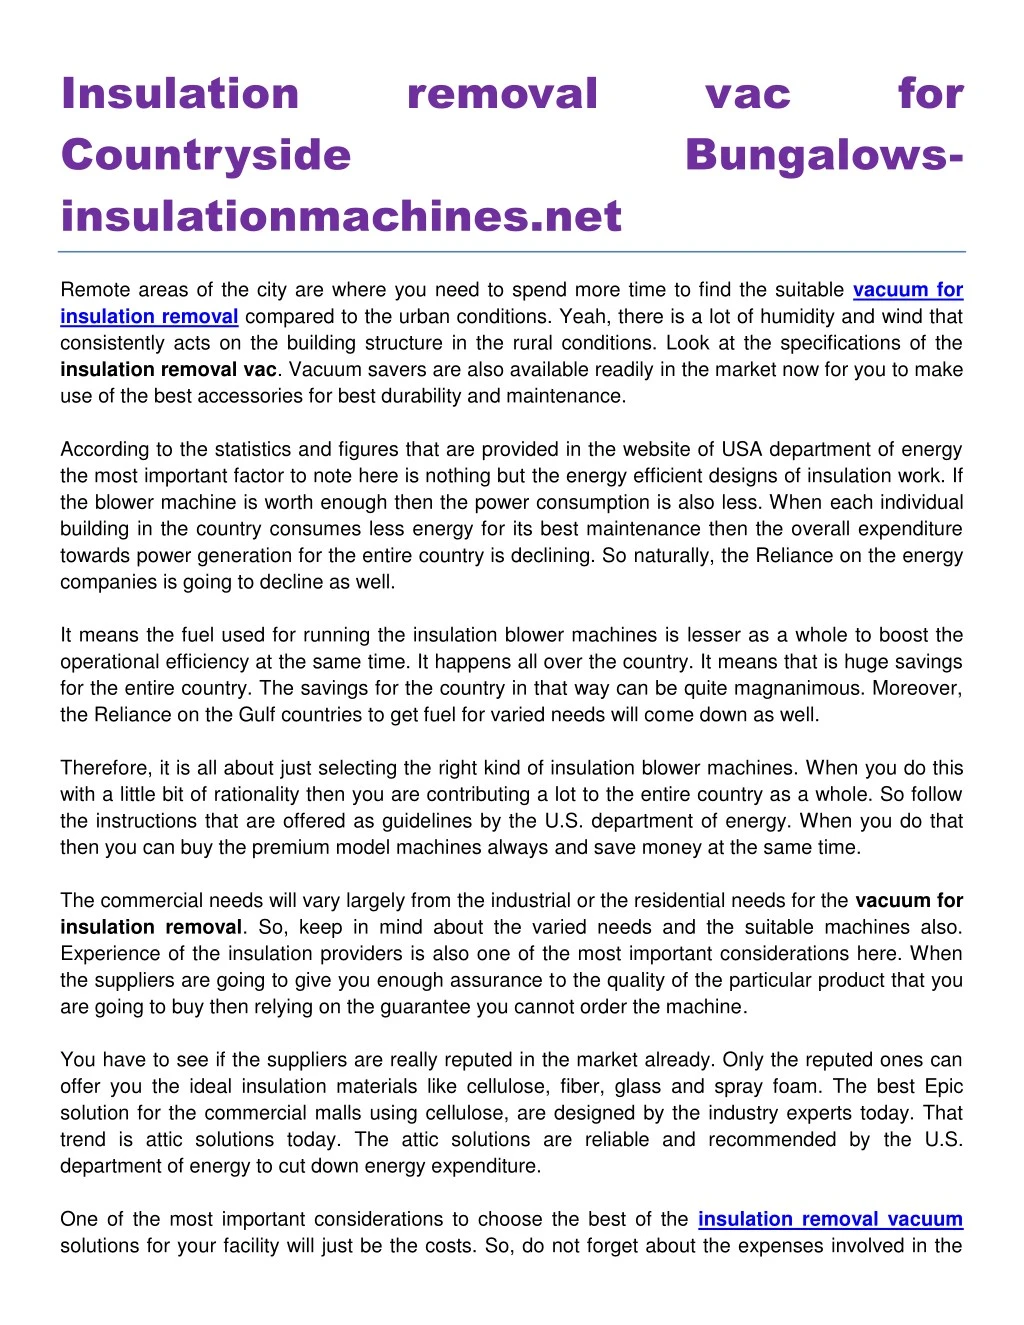 insulation countryside insulationmachines net